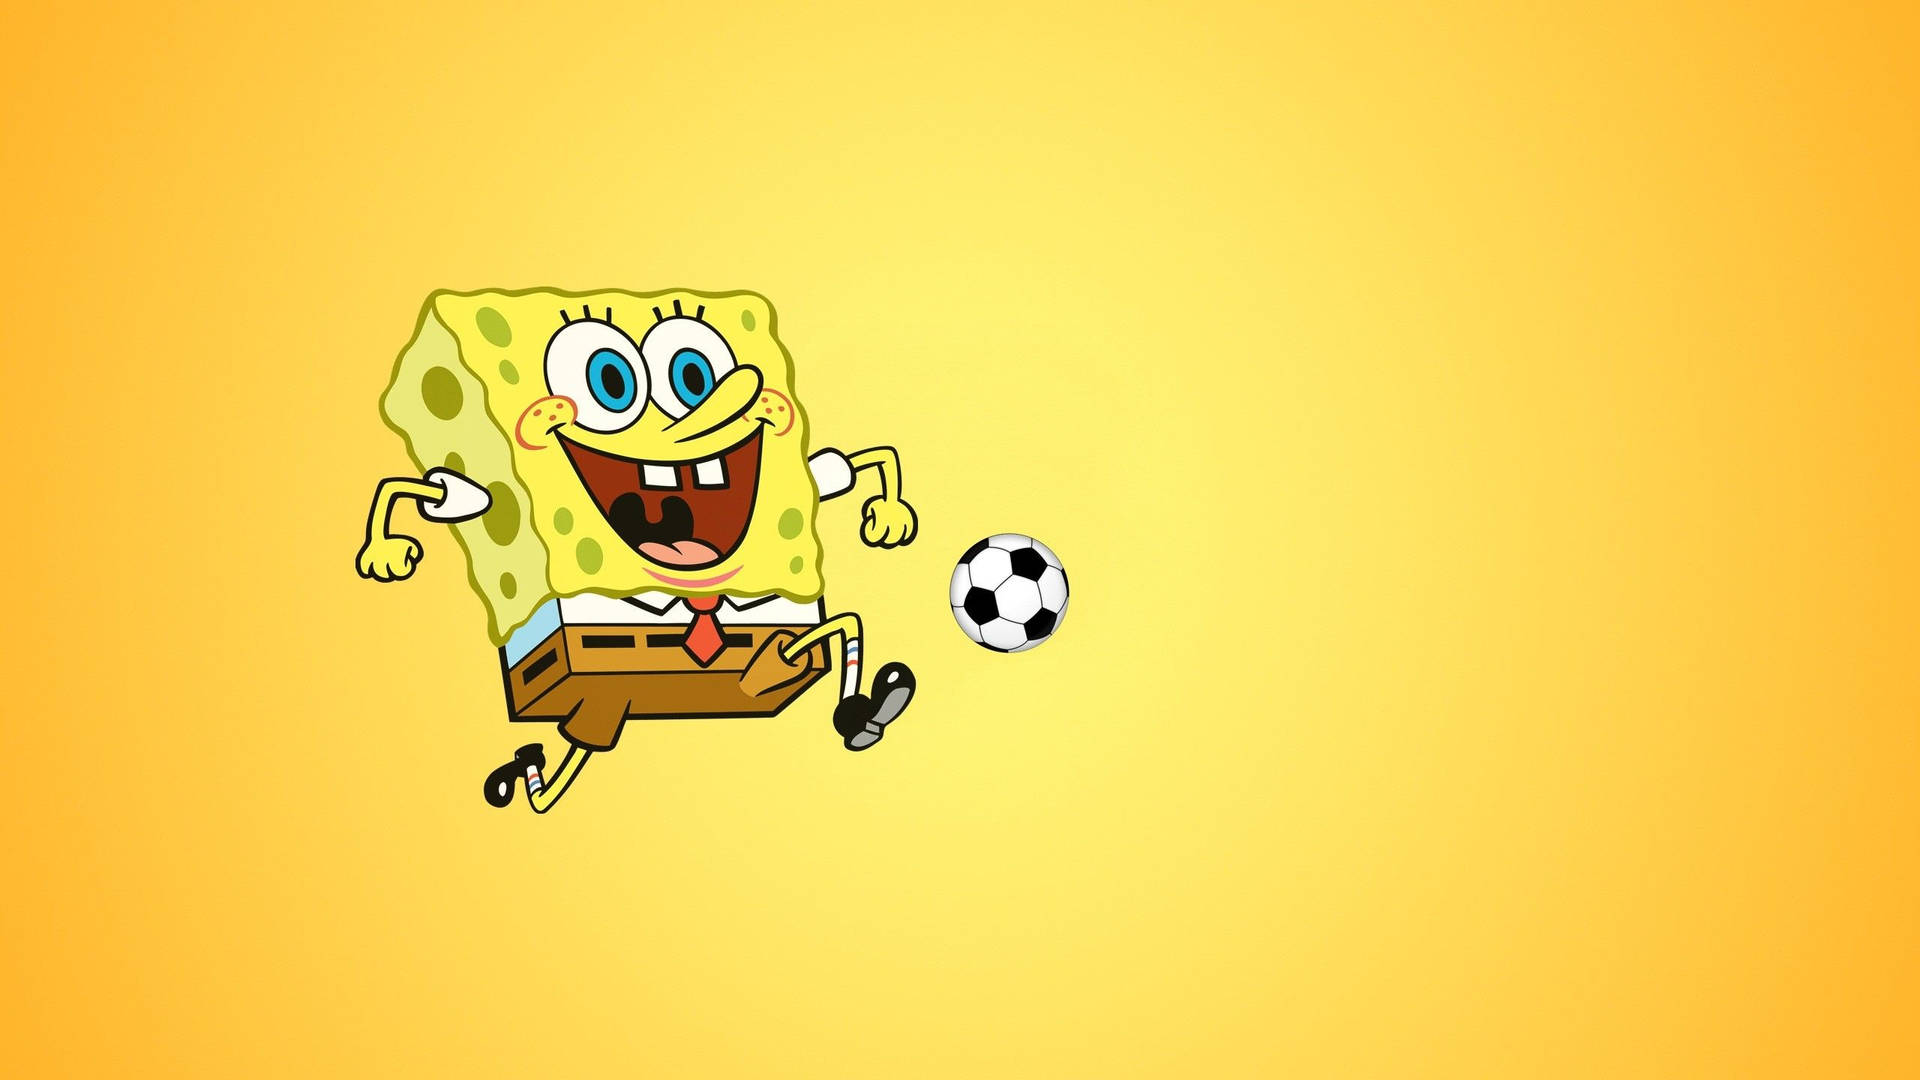 Cute Spongebob Playing Soccer Background